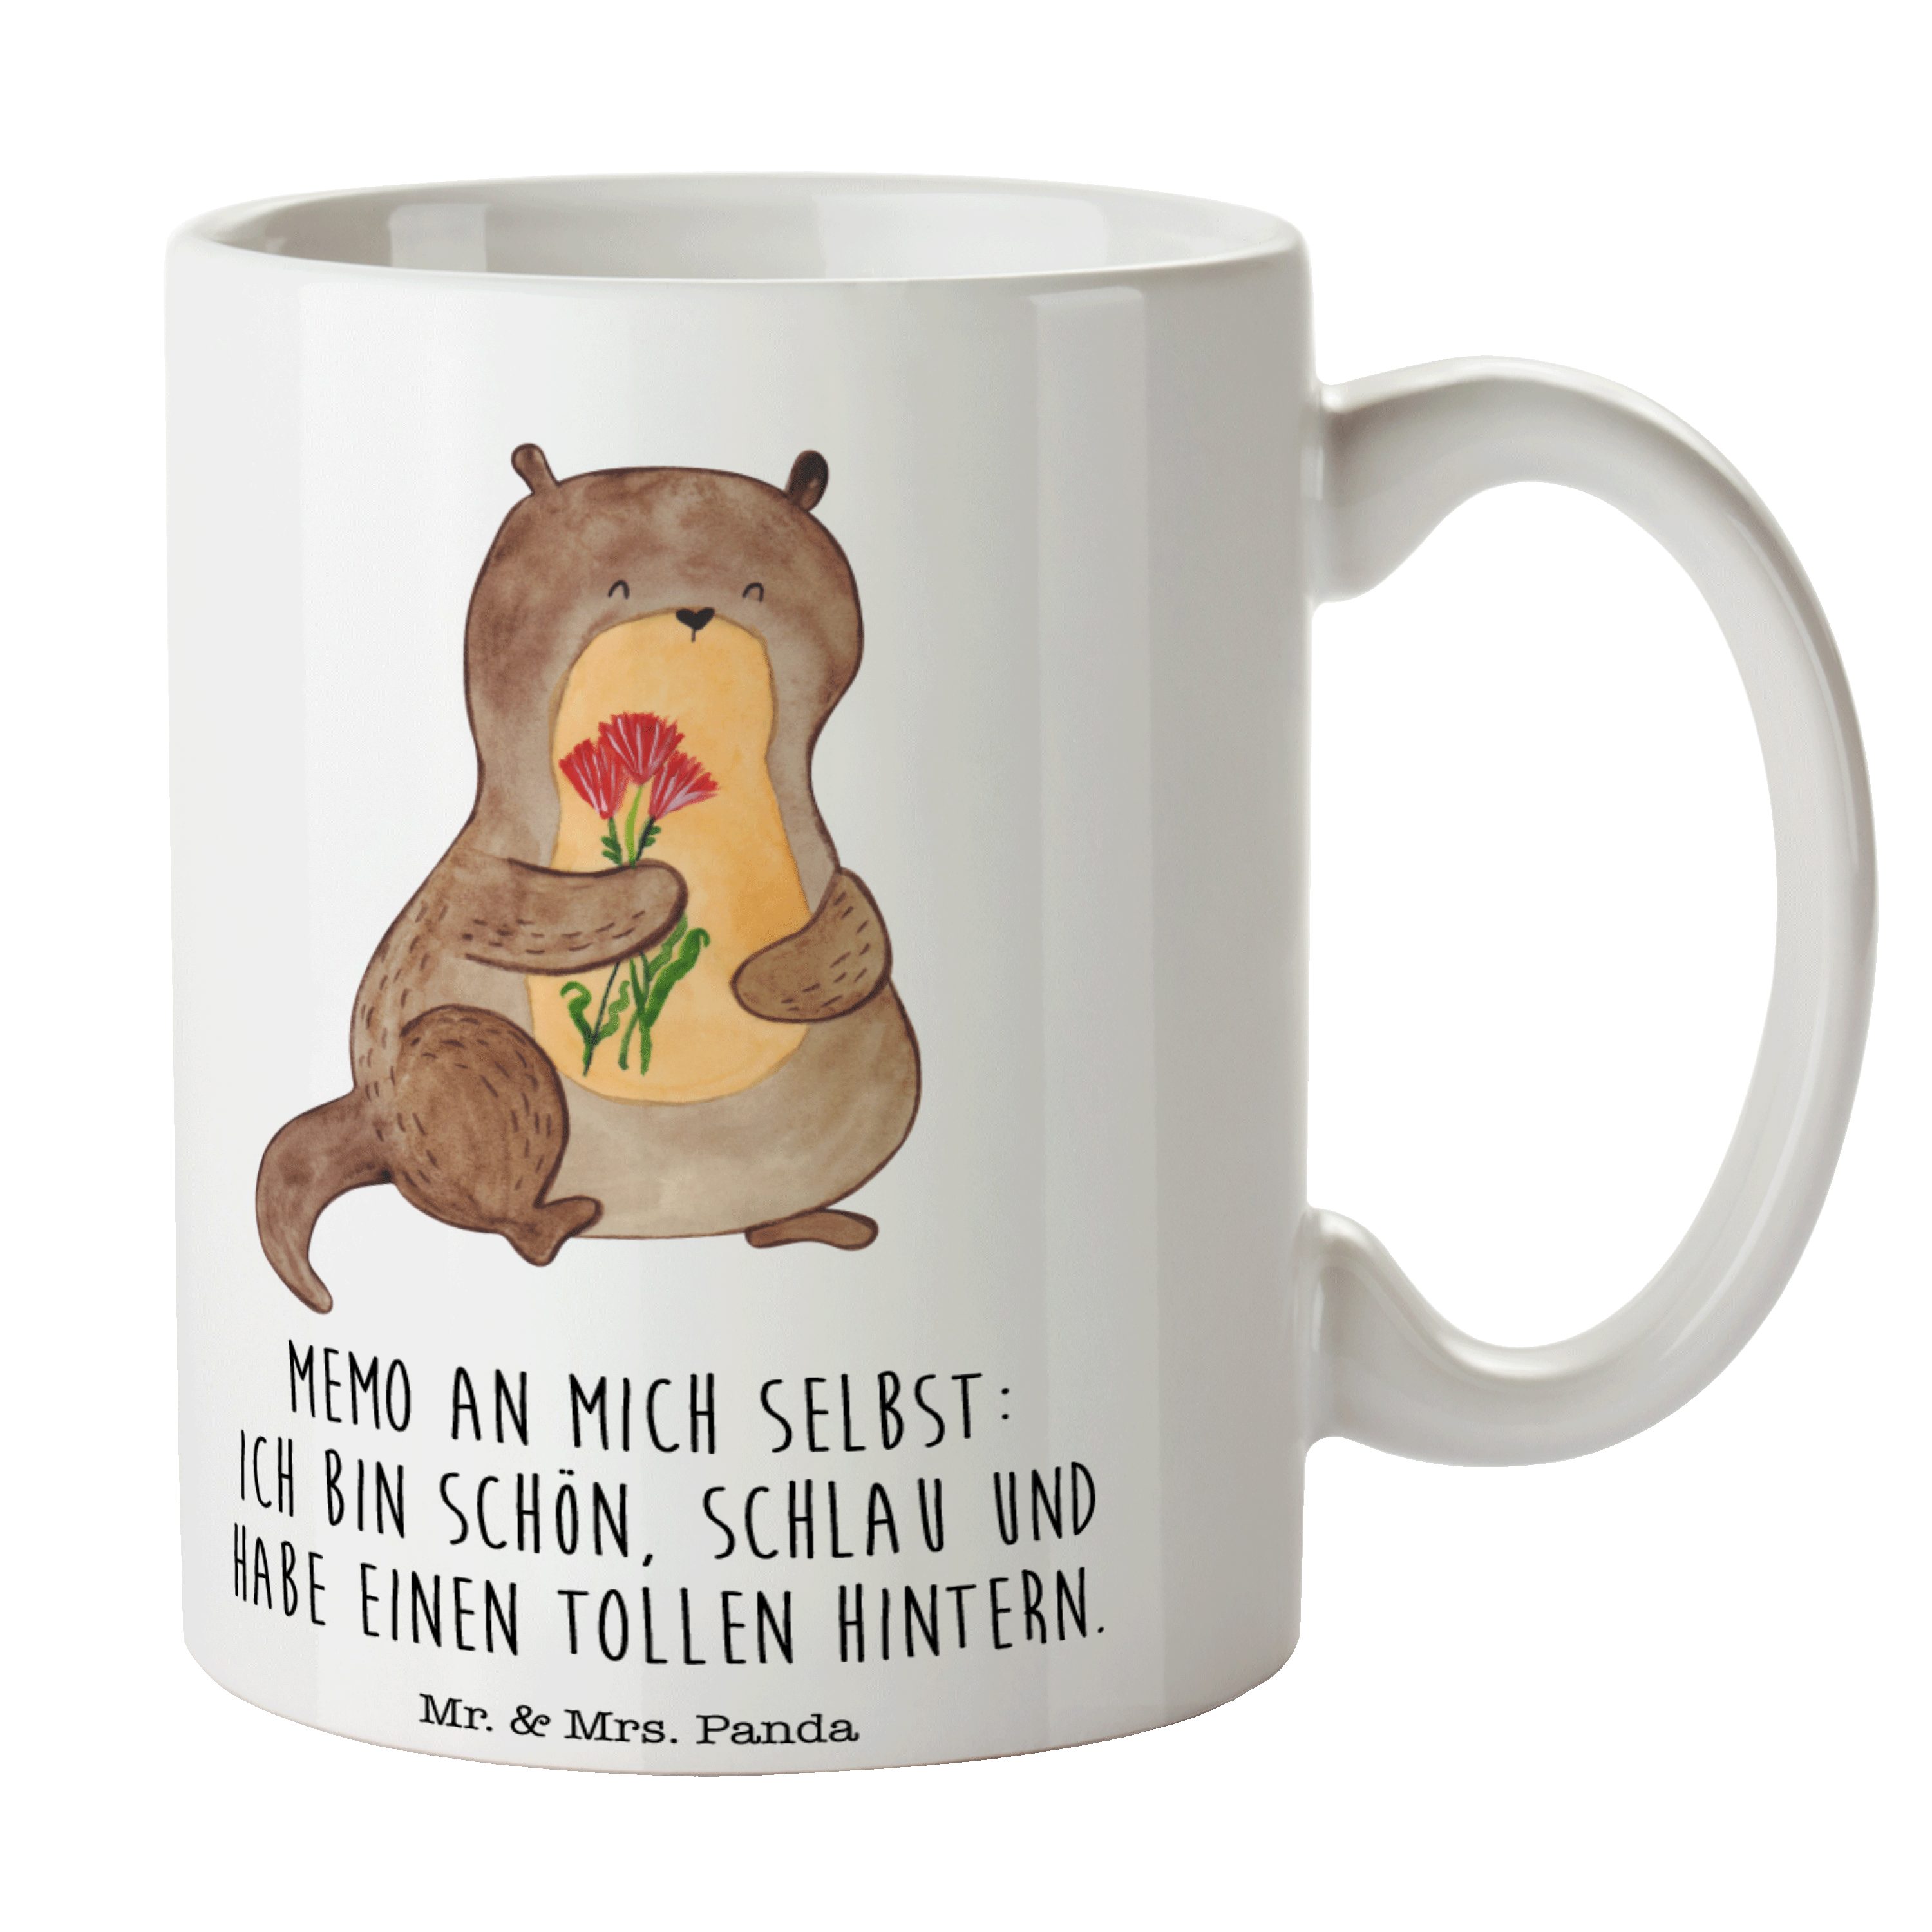 Mr. & Mrs. Panda Tasse Otter Blumenstrauß - Weiß - Geschenk, Kaffeebecher, Kaffeetasse, Tass, Keramik